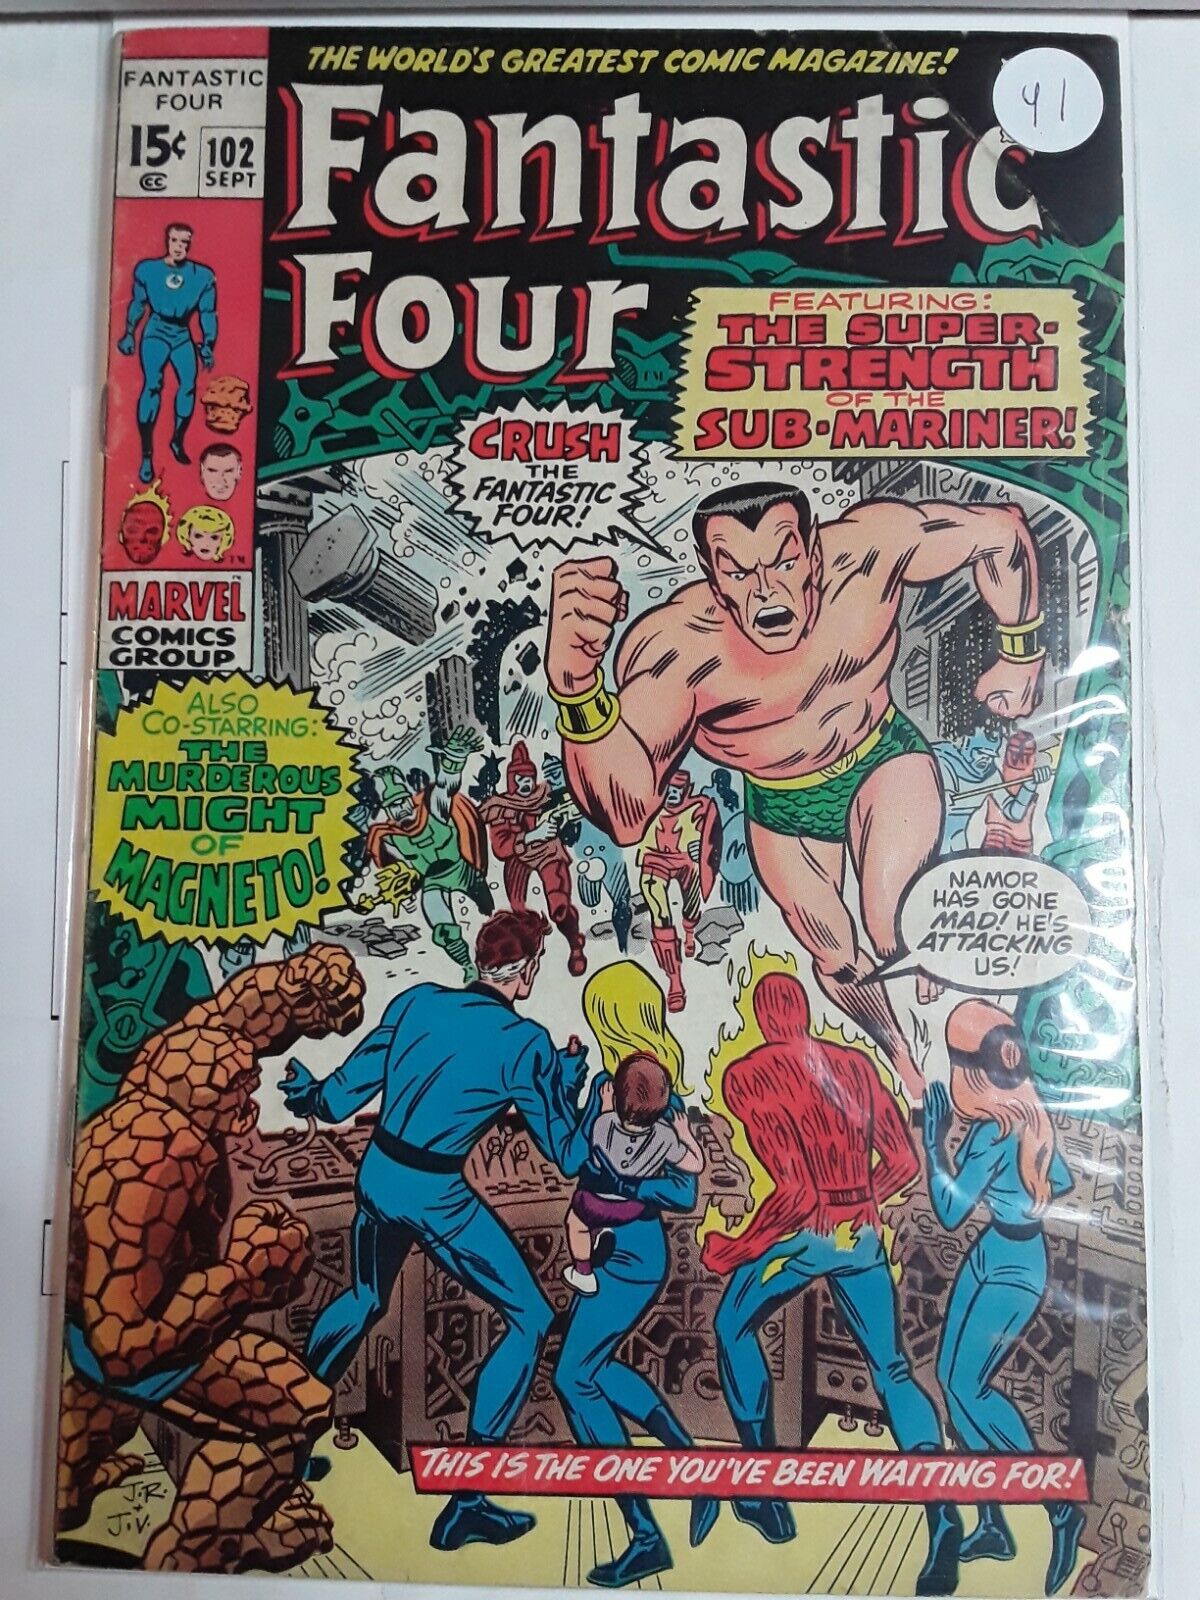 Fantastic Four #102 (September 1970) Marvel Comics